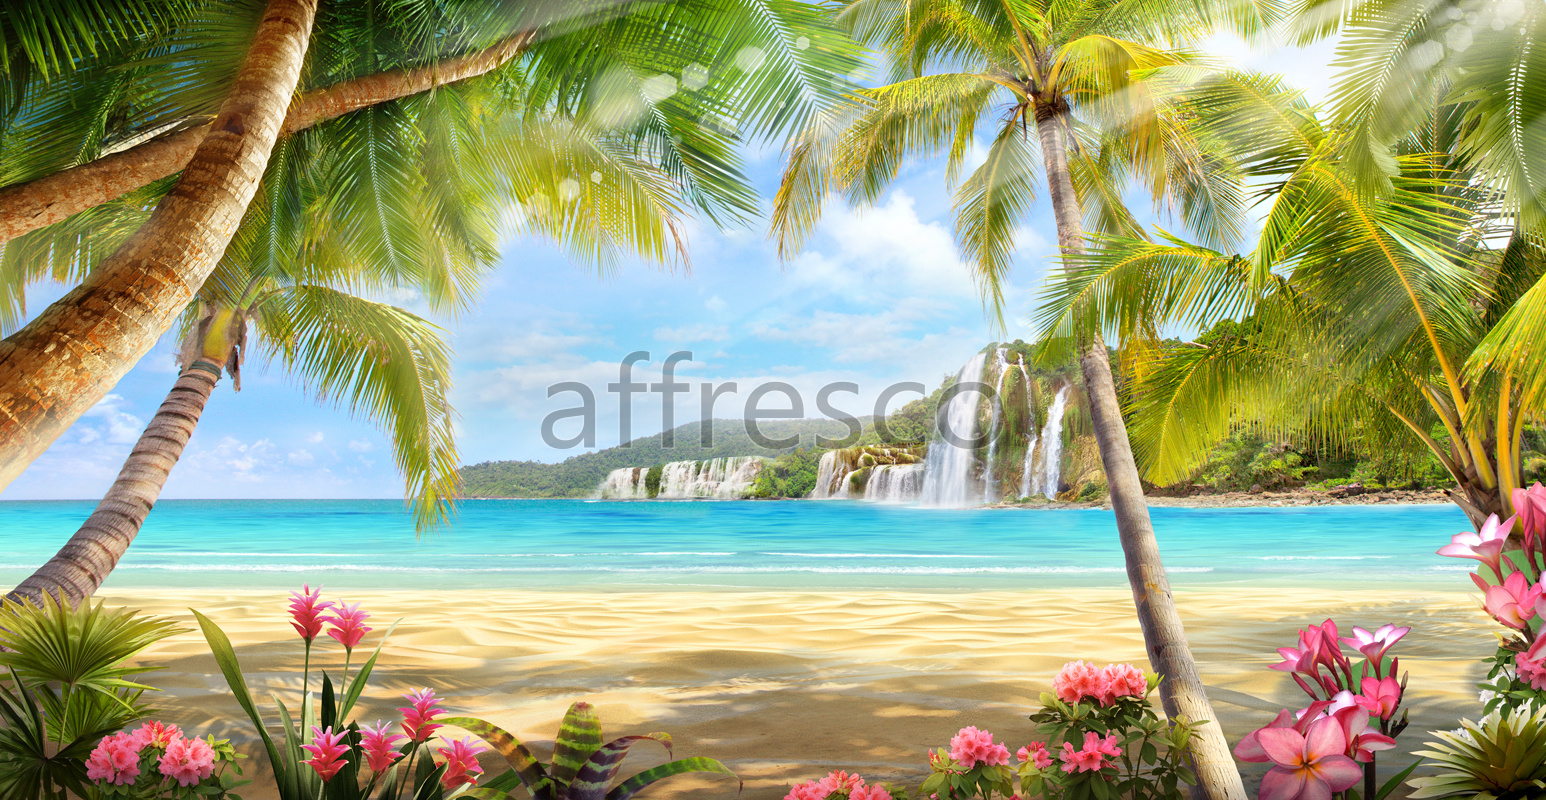 6514 | The best landscapes | Fairy beach | Affresco Factory